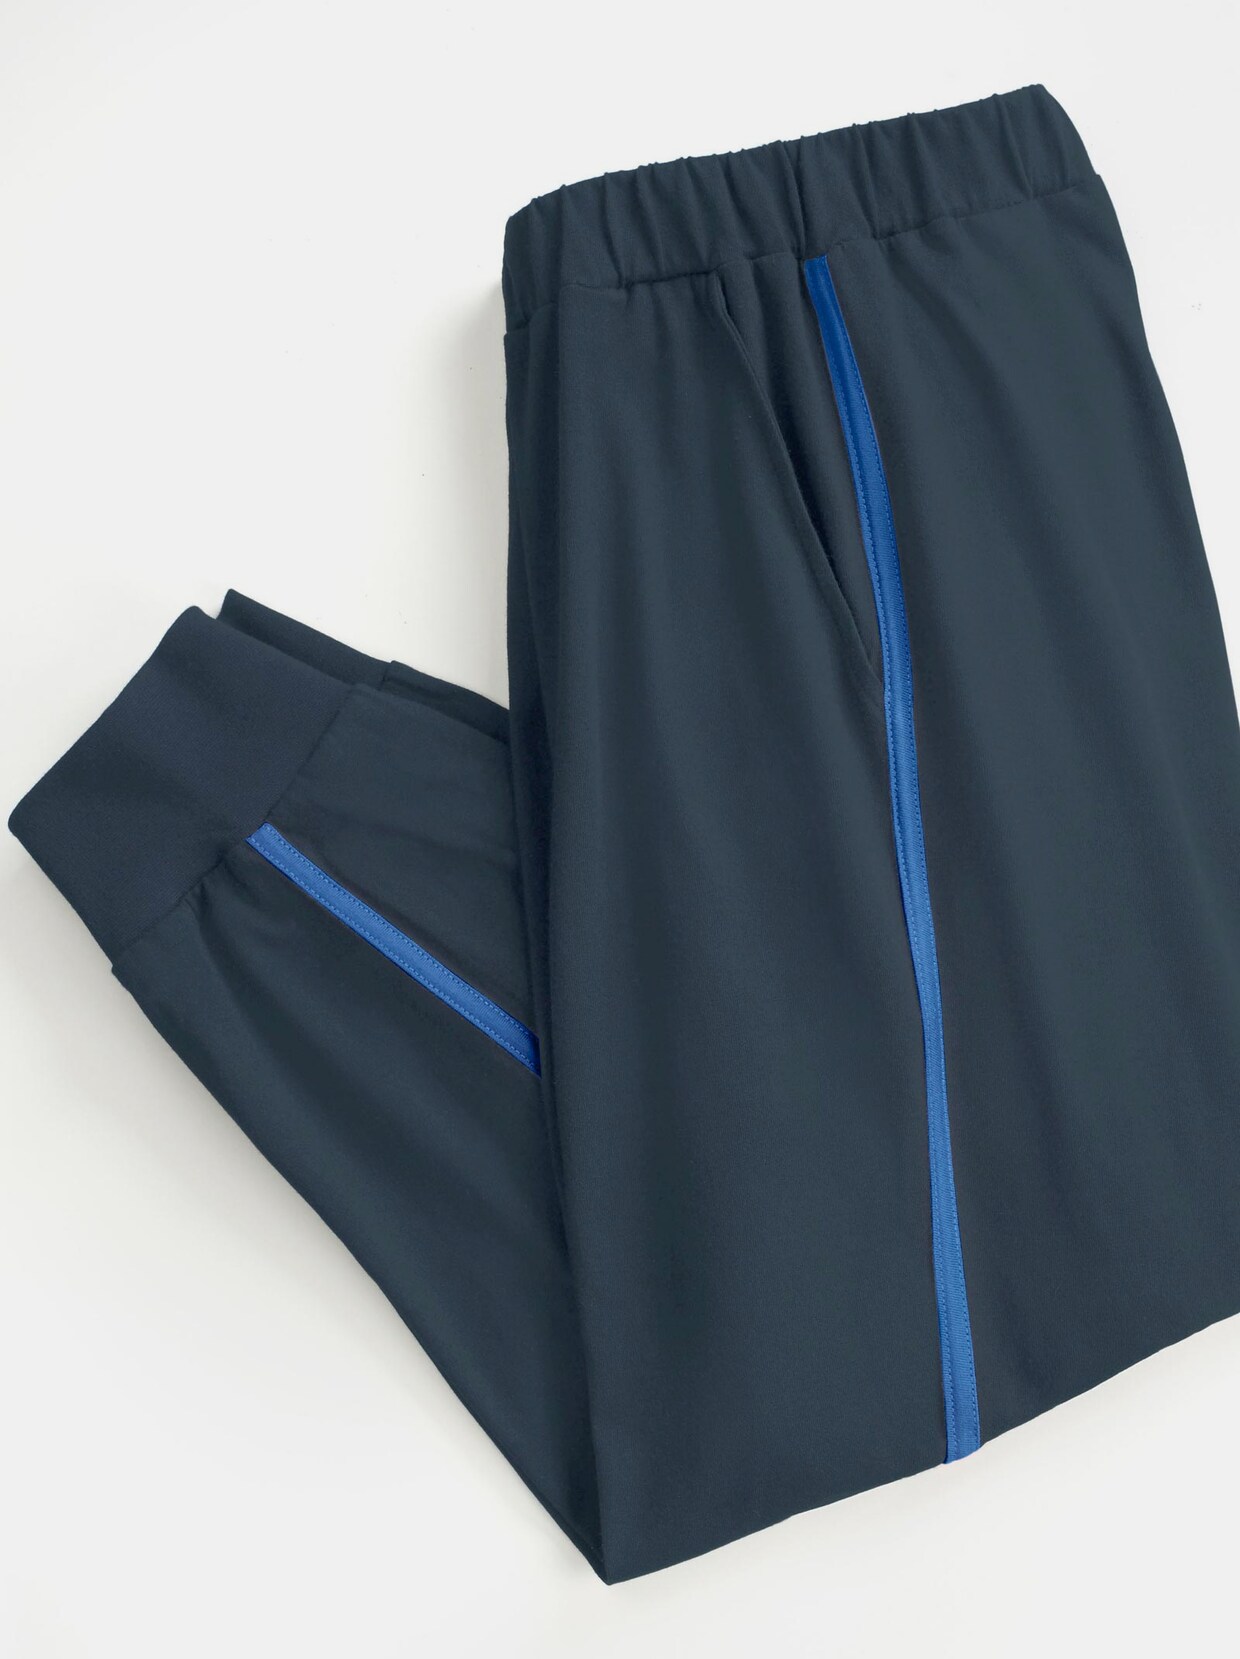 Pantalon 3/4 - marine-bleu